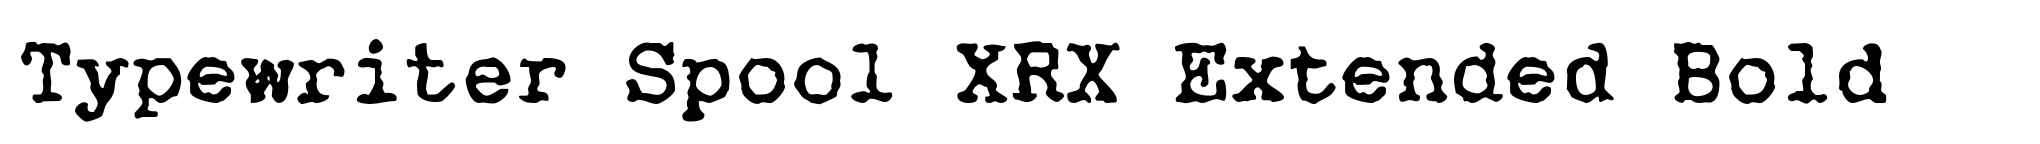 Typewriter Spool XRX Extended Bold image